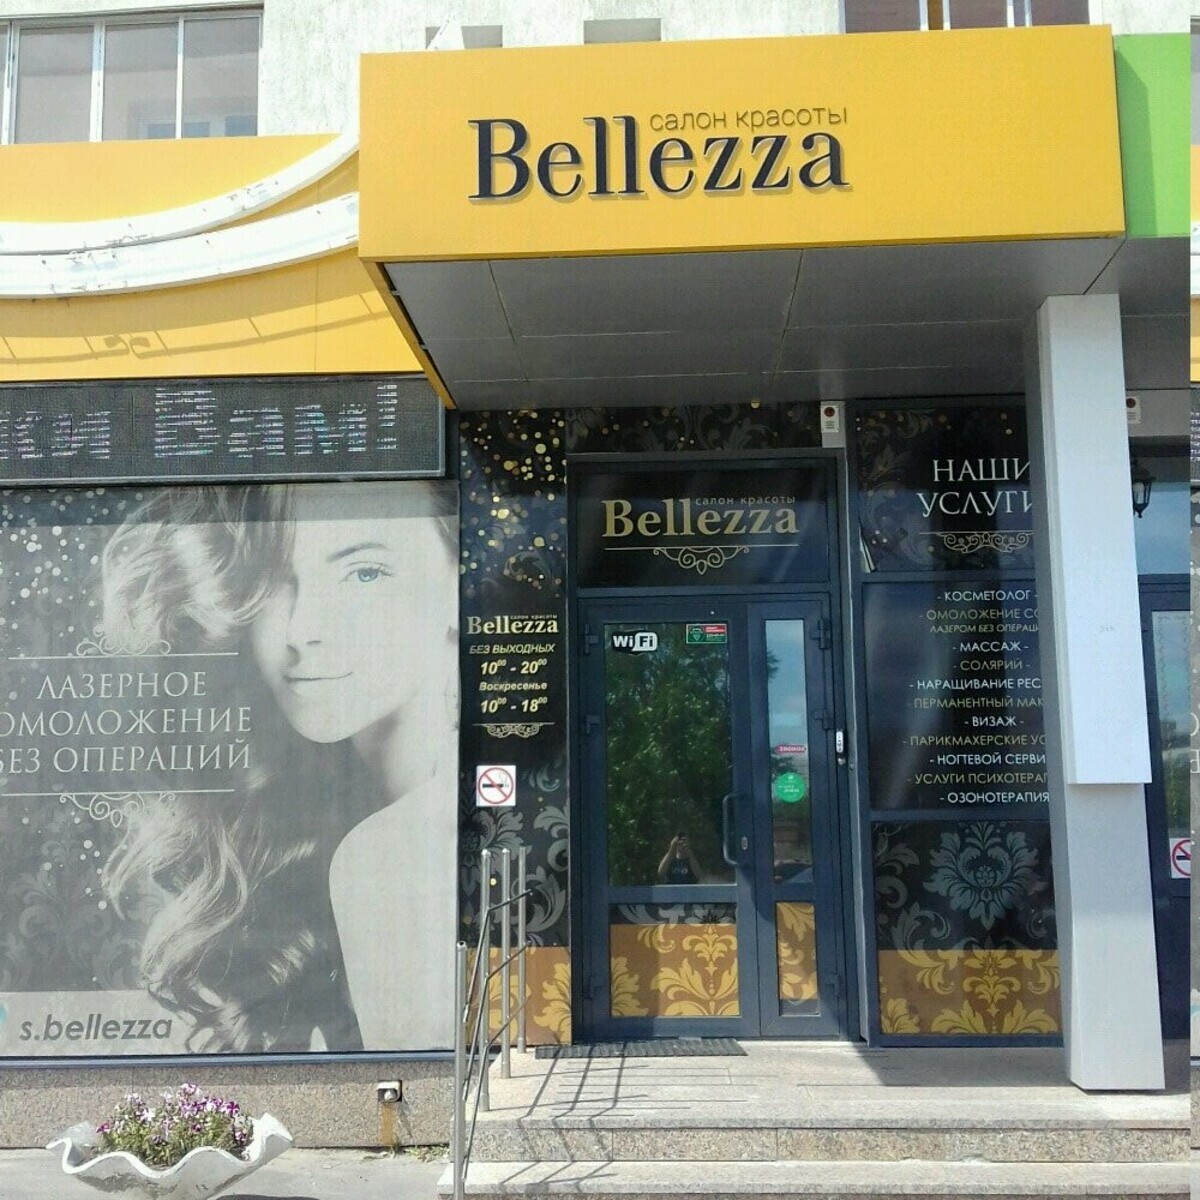 Beleezza - Челябинск - Витрина с улицы